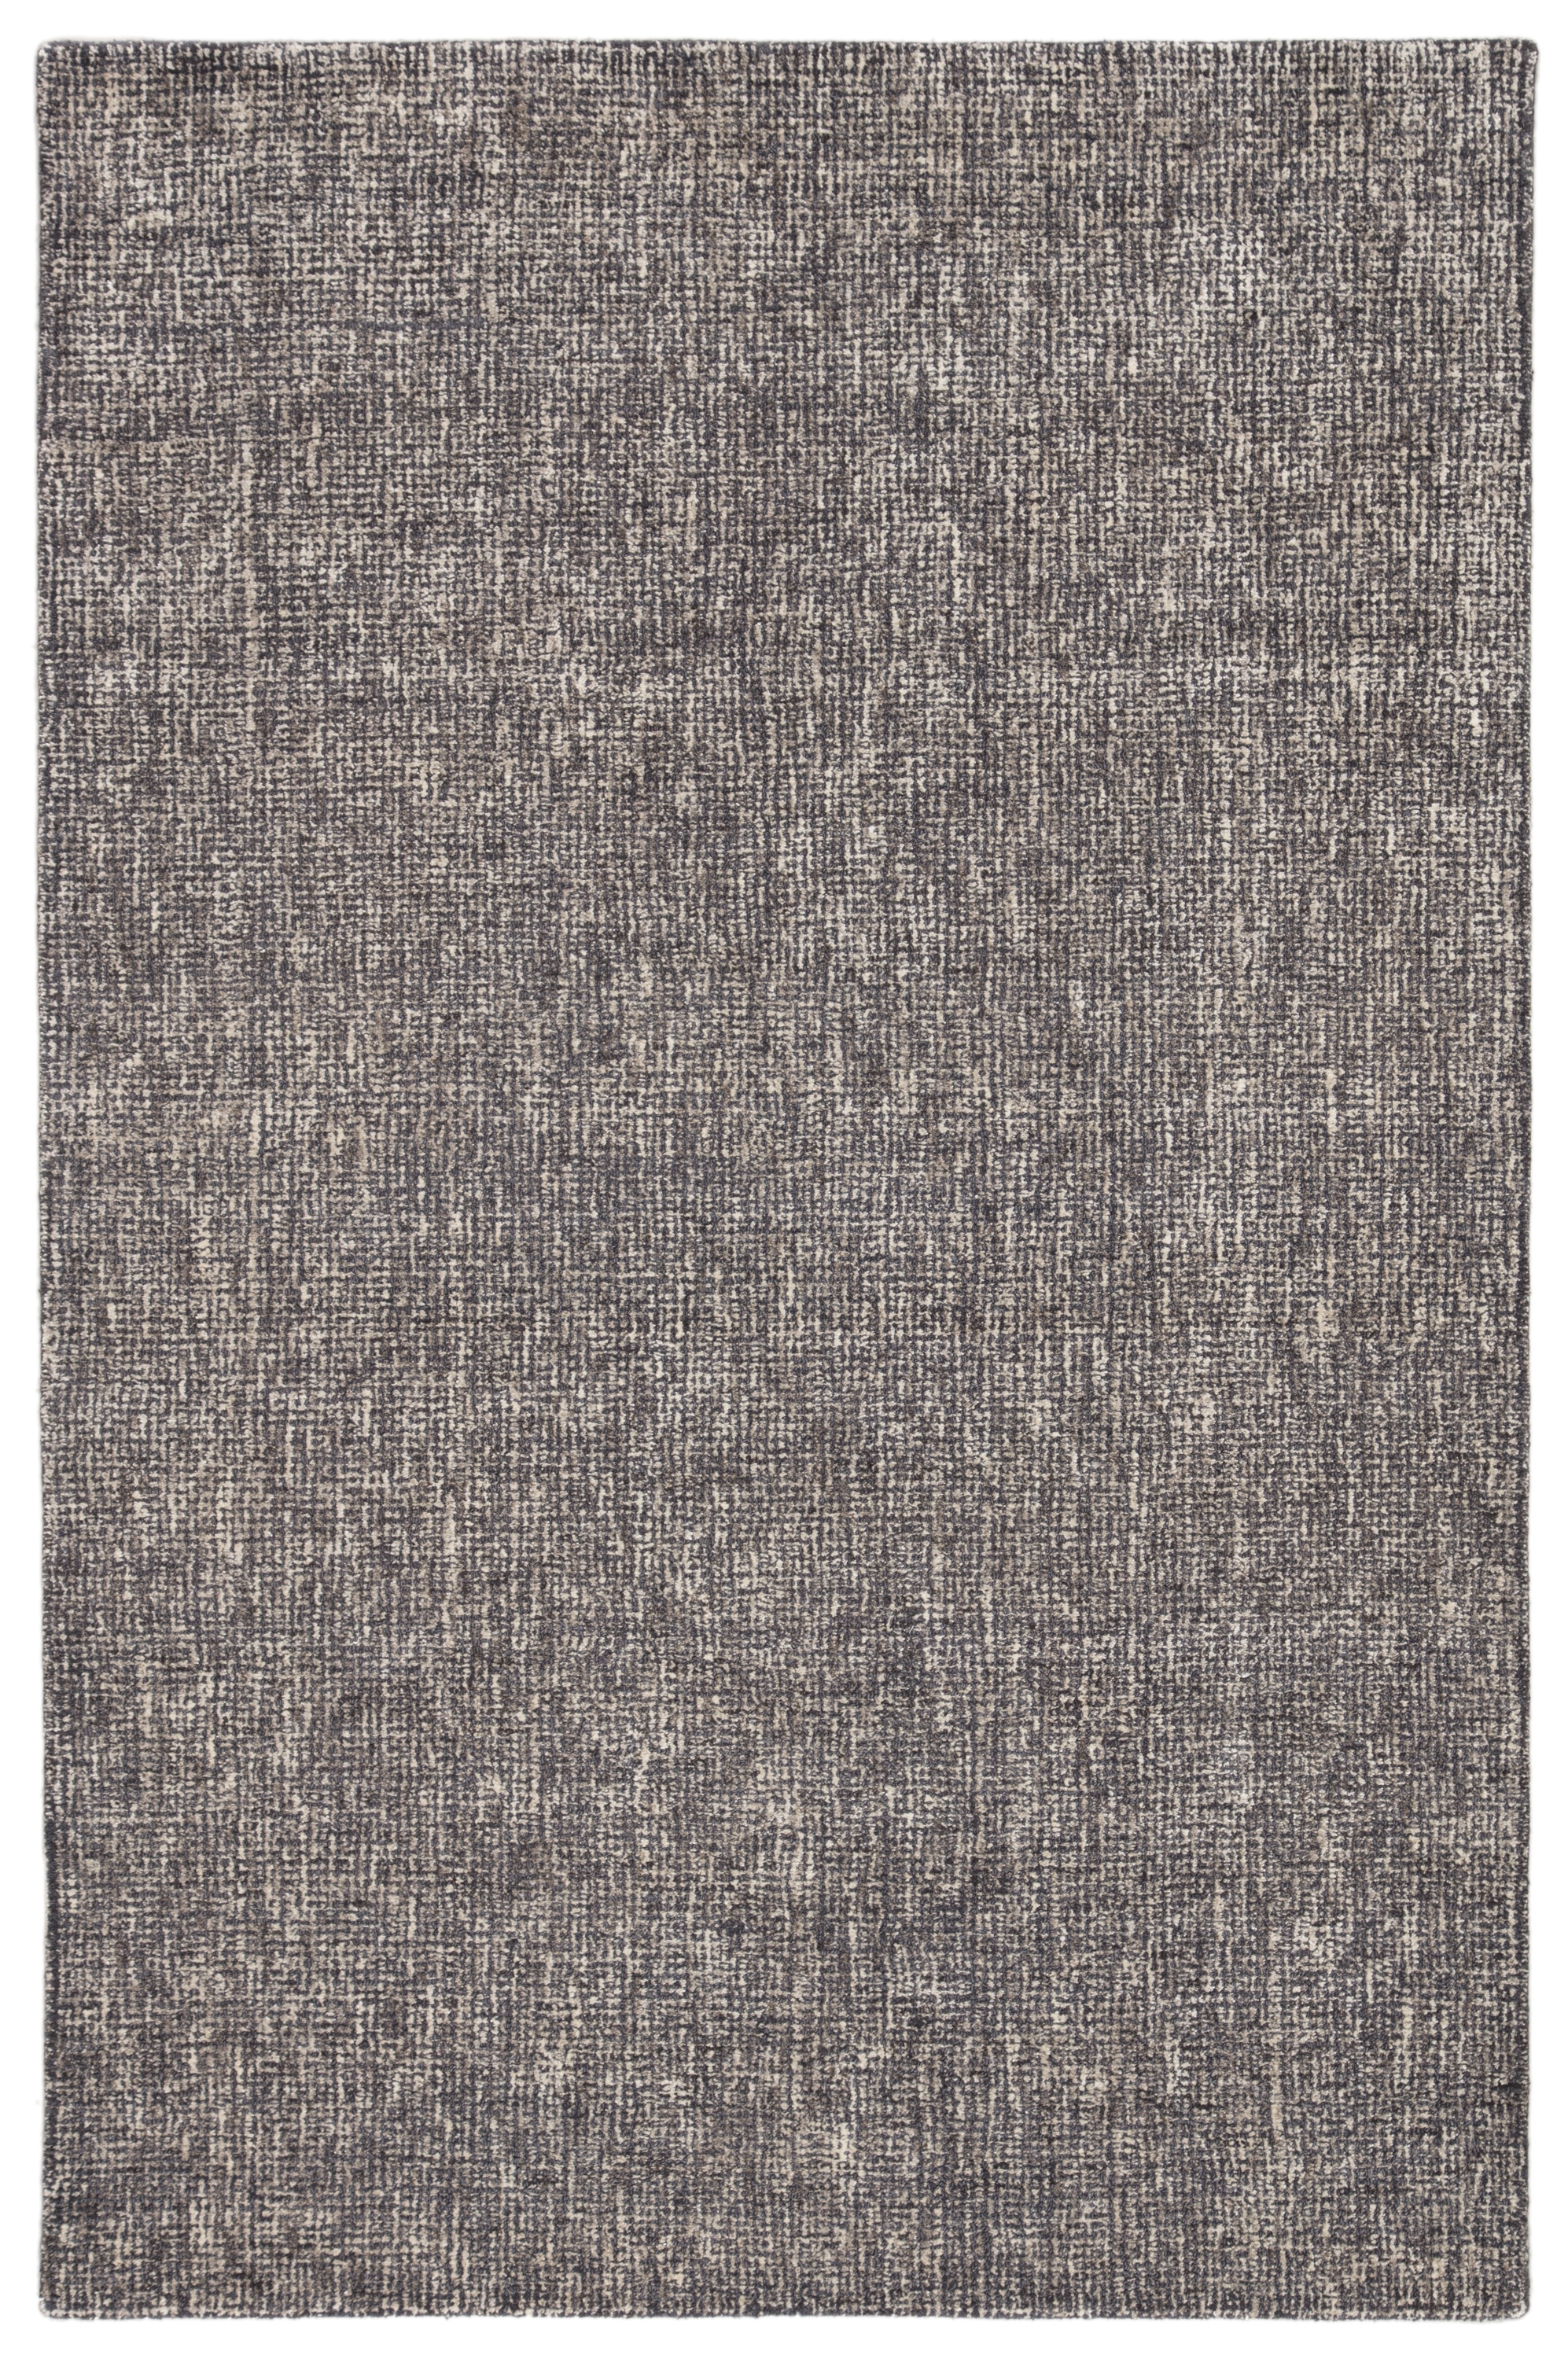 Britta Plus Handmade Solid Dark Gray/ Light Gray Area Rug (9' X 12') - Image 0